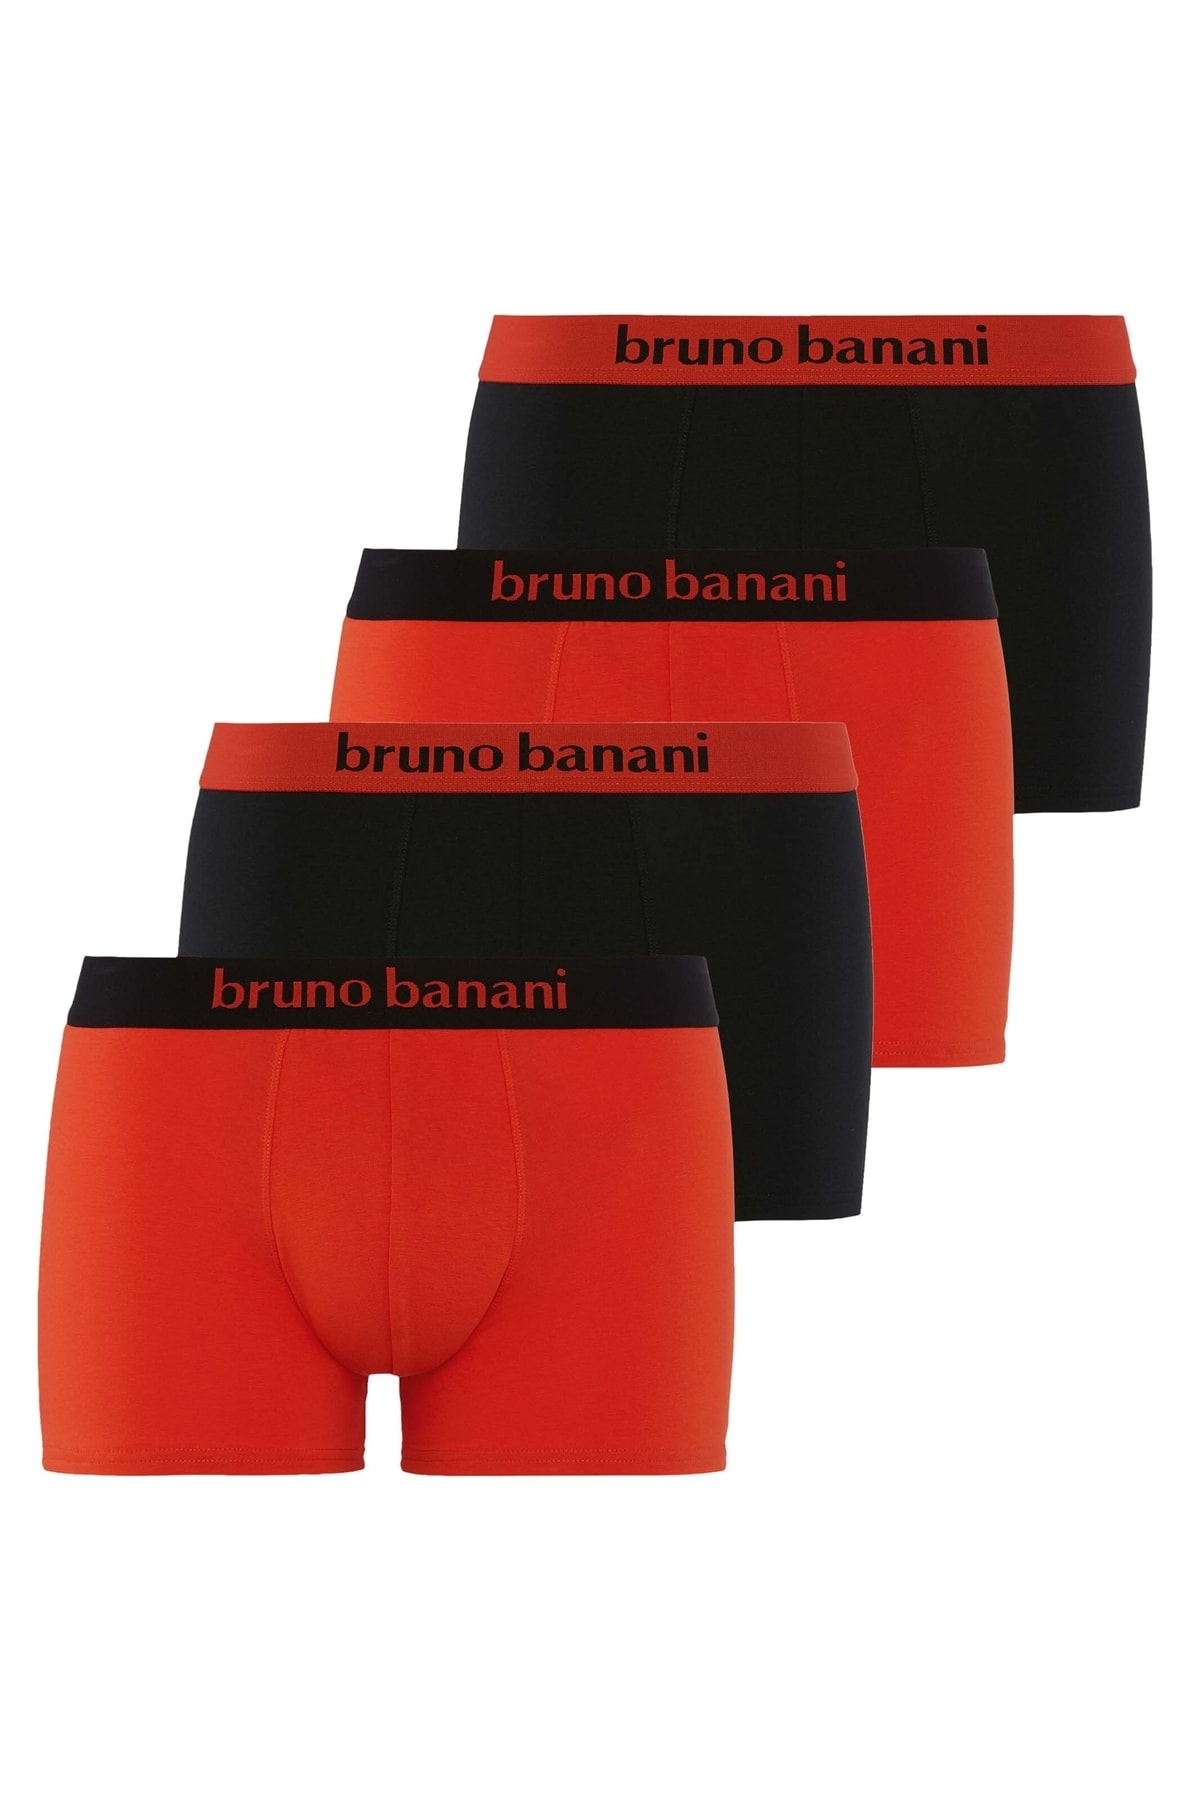 Bruno Banani Boxershorts Mehrfarbig 4er-Pack Fast ausverkauft